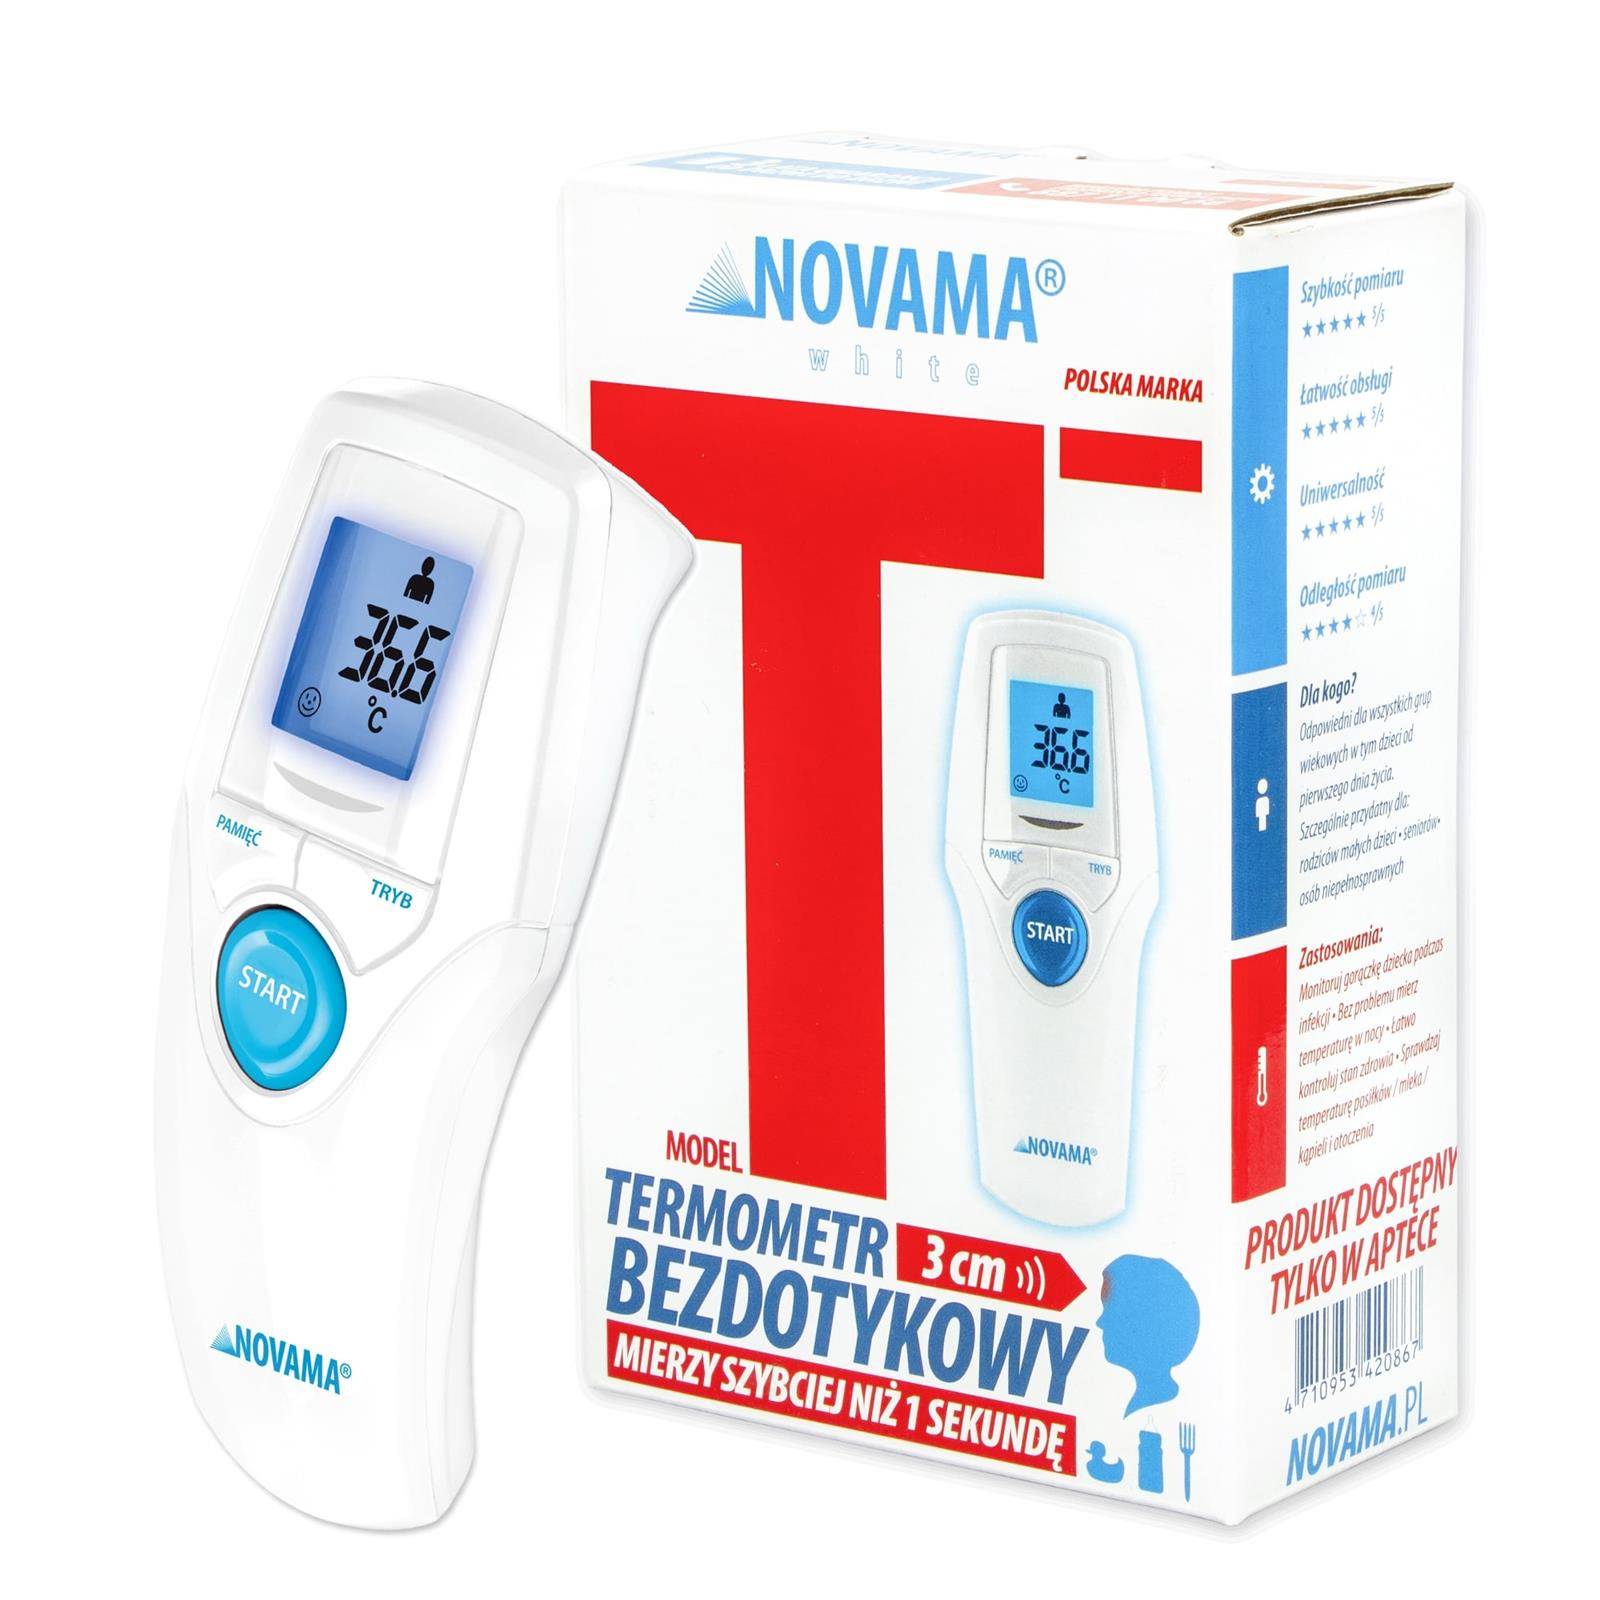 NOVAMA White T1s Termometr bezdotykowy